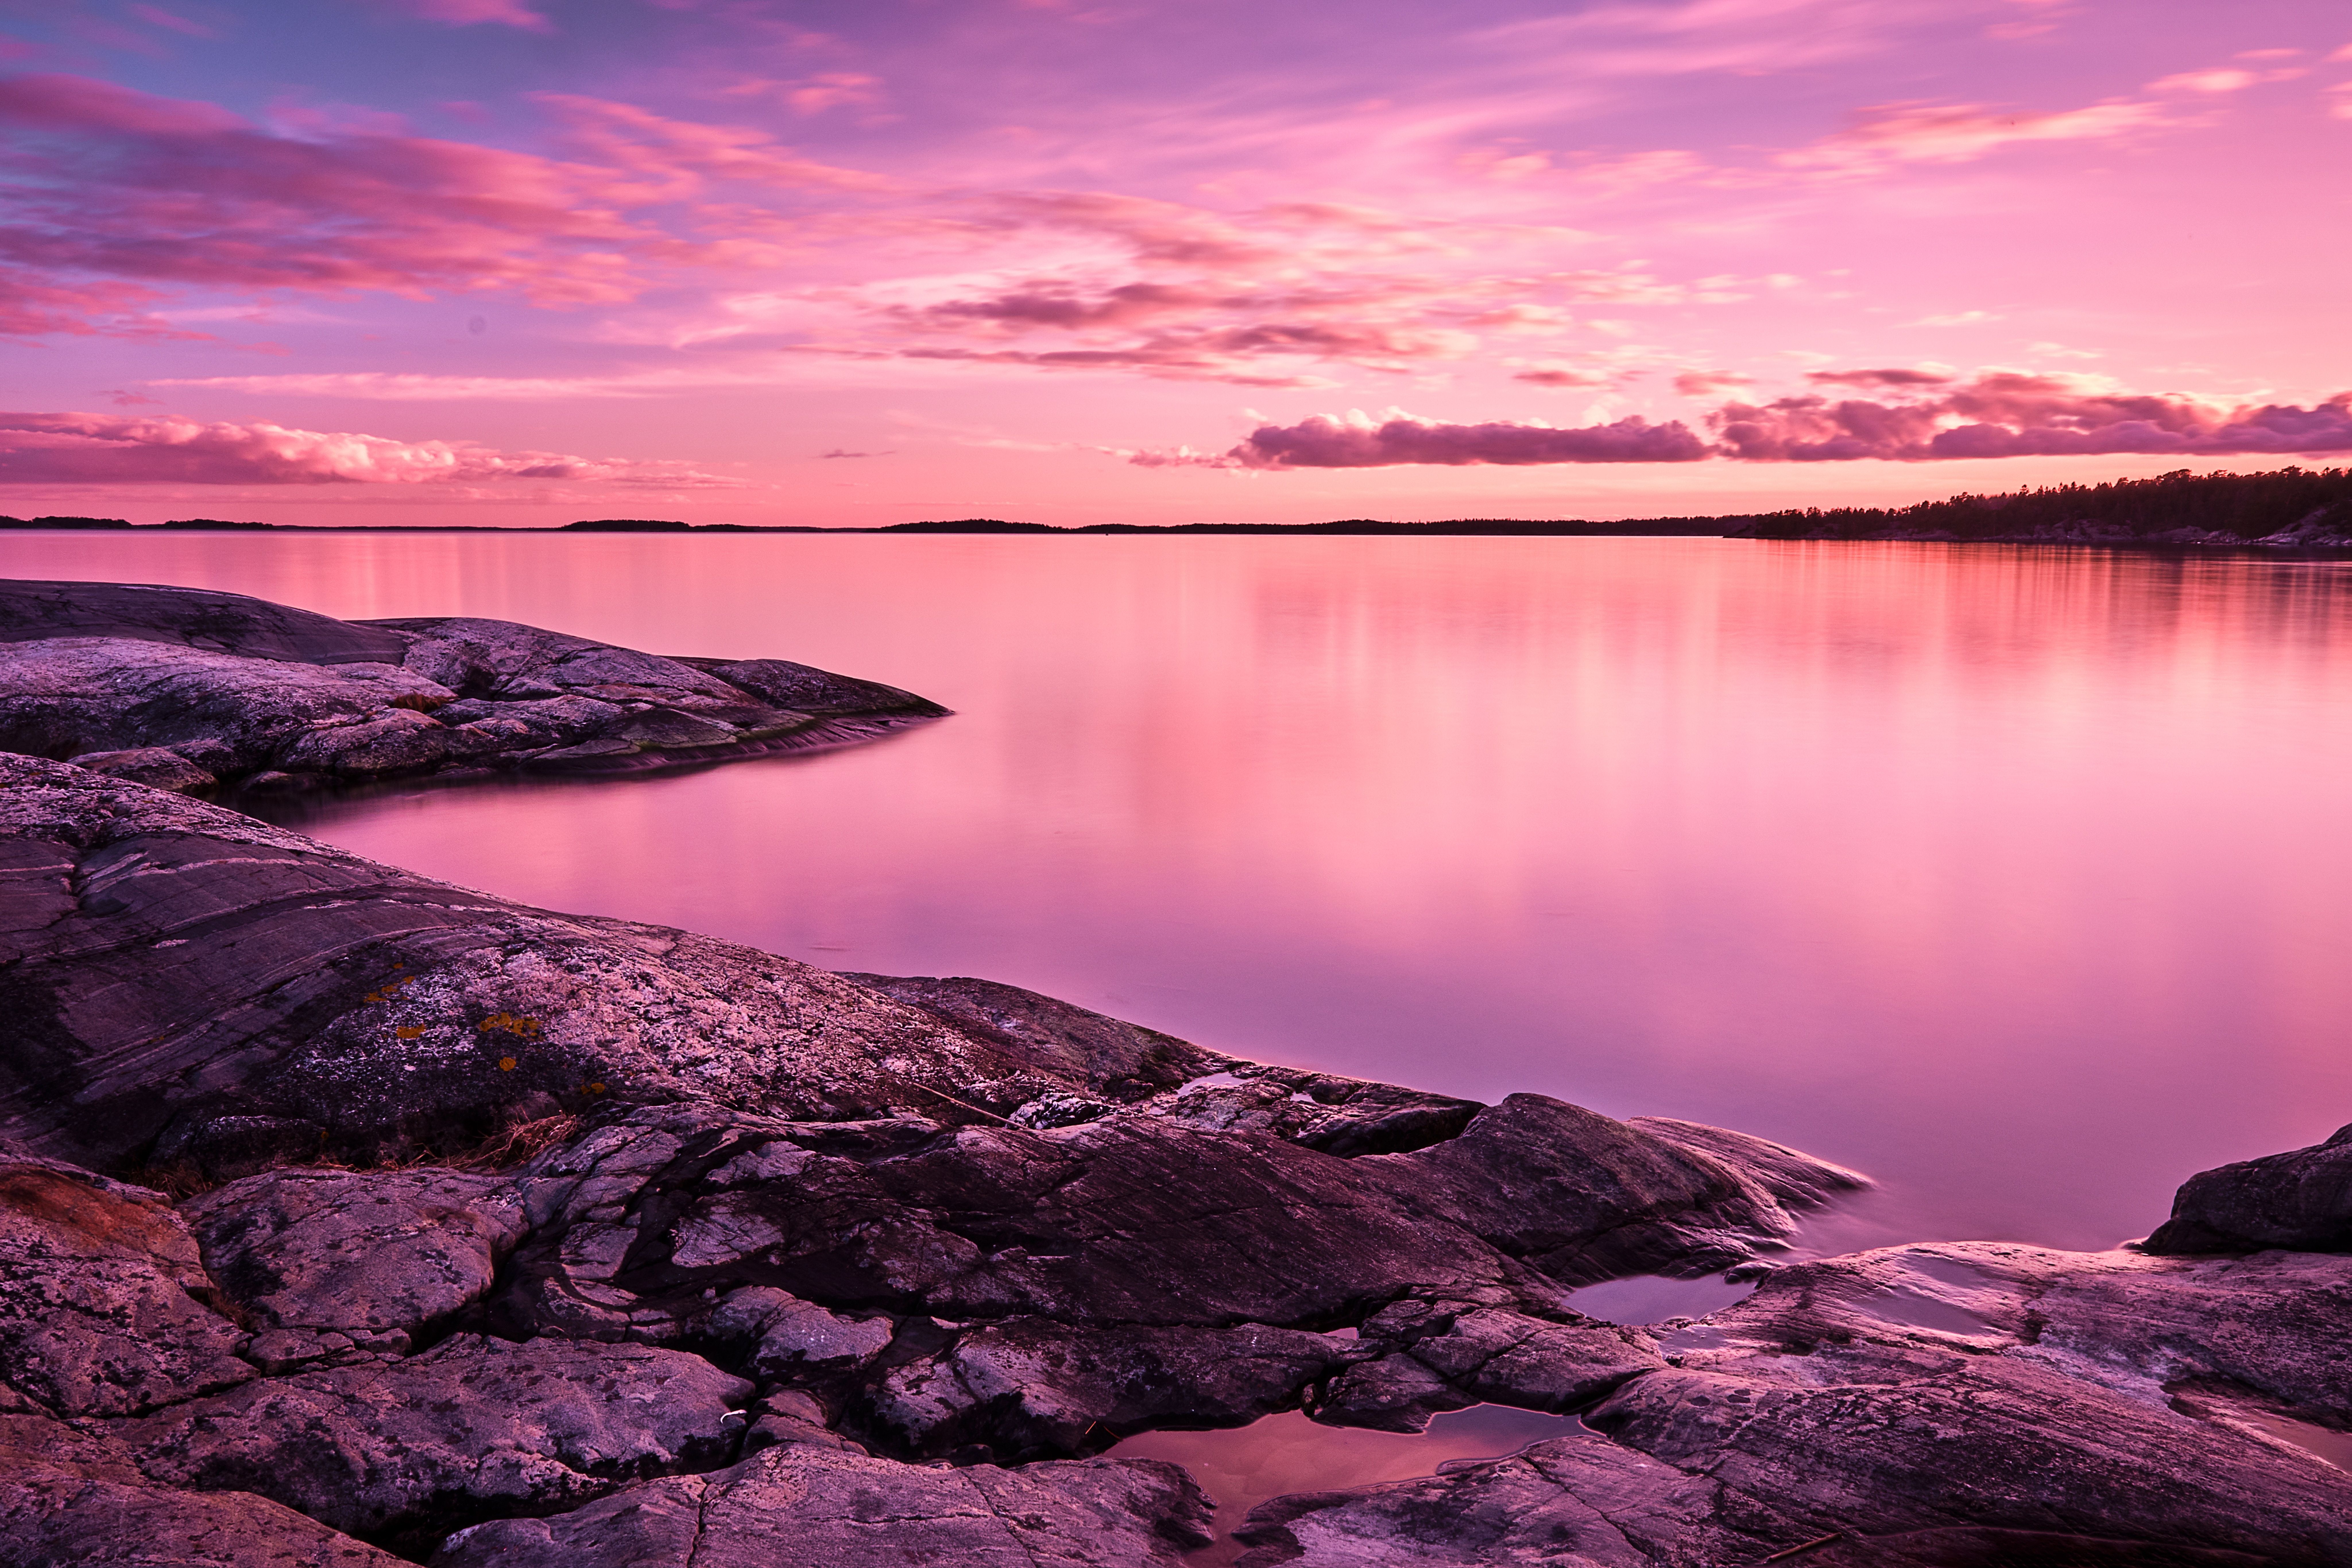 Sunset 4K Wallpaper, Scenery, Lake, Rocks, Pink sky, 8K, Nature